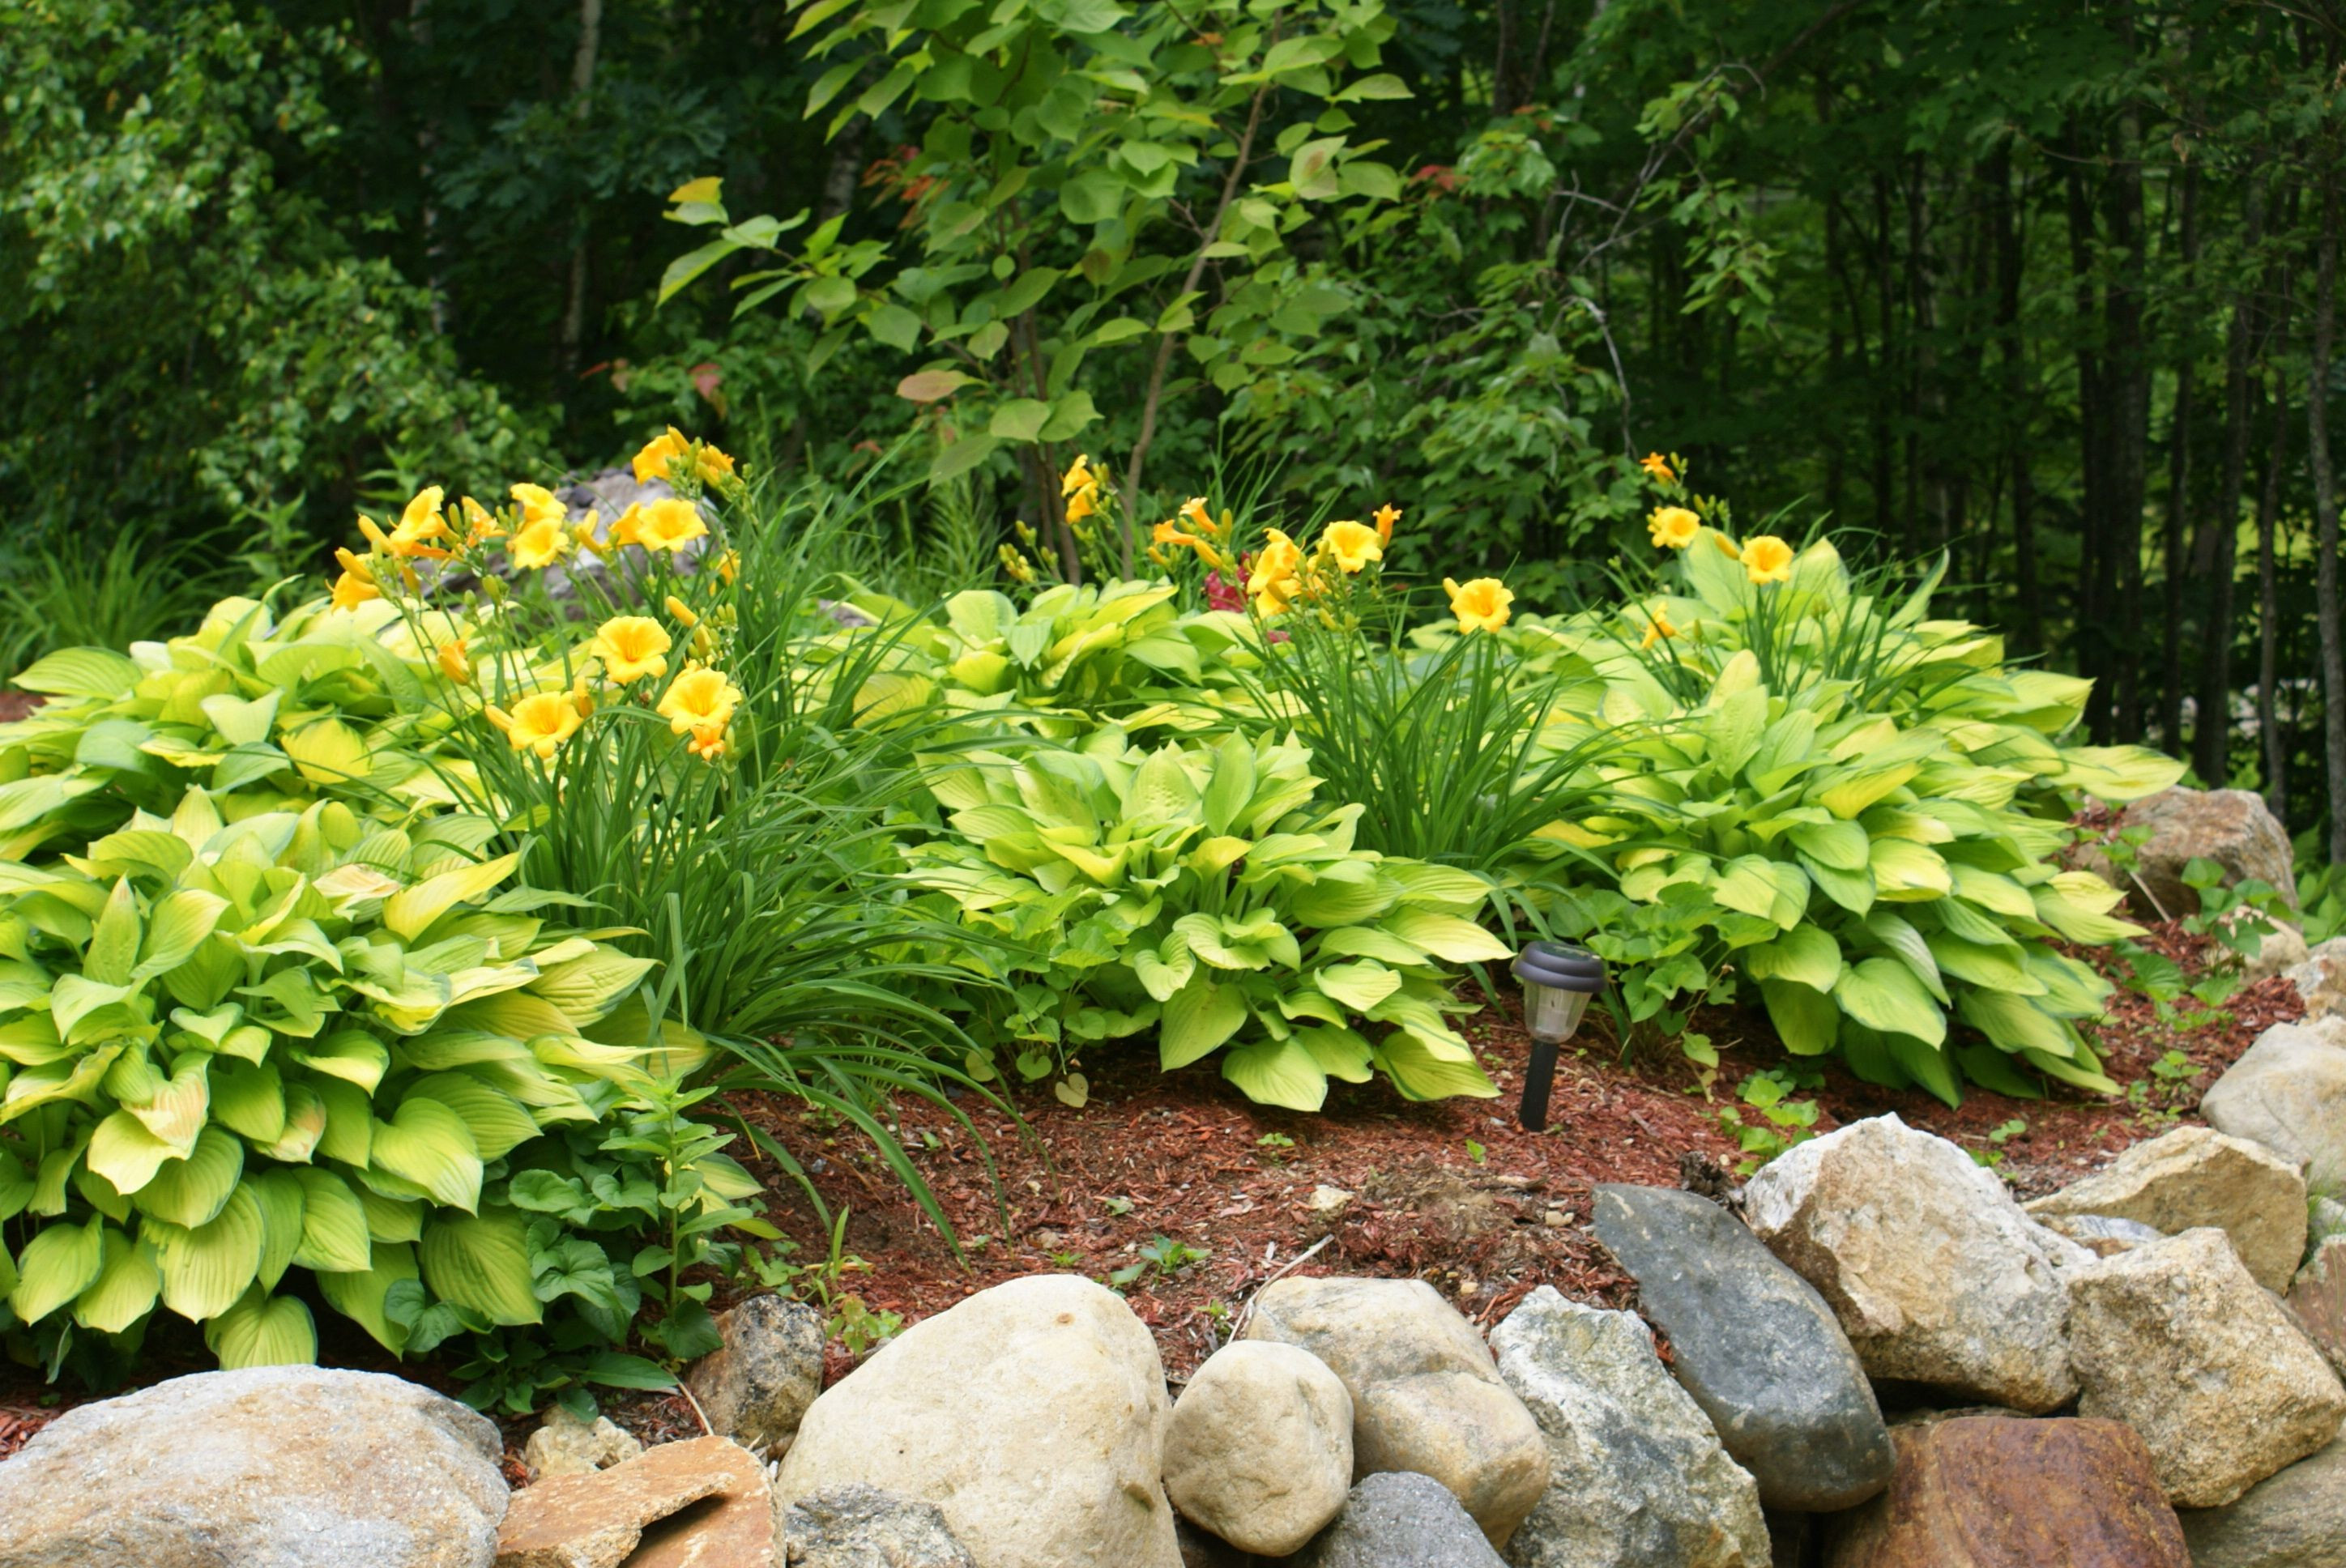 Best ideas about Hosta Garden Ideas
. Save or Pin Hostas and Daylilies Garden ideas Now.